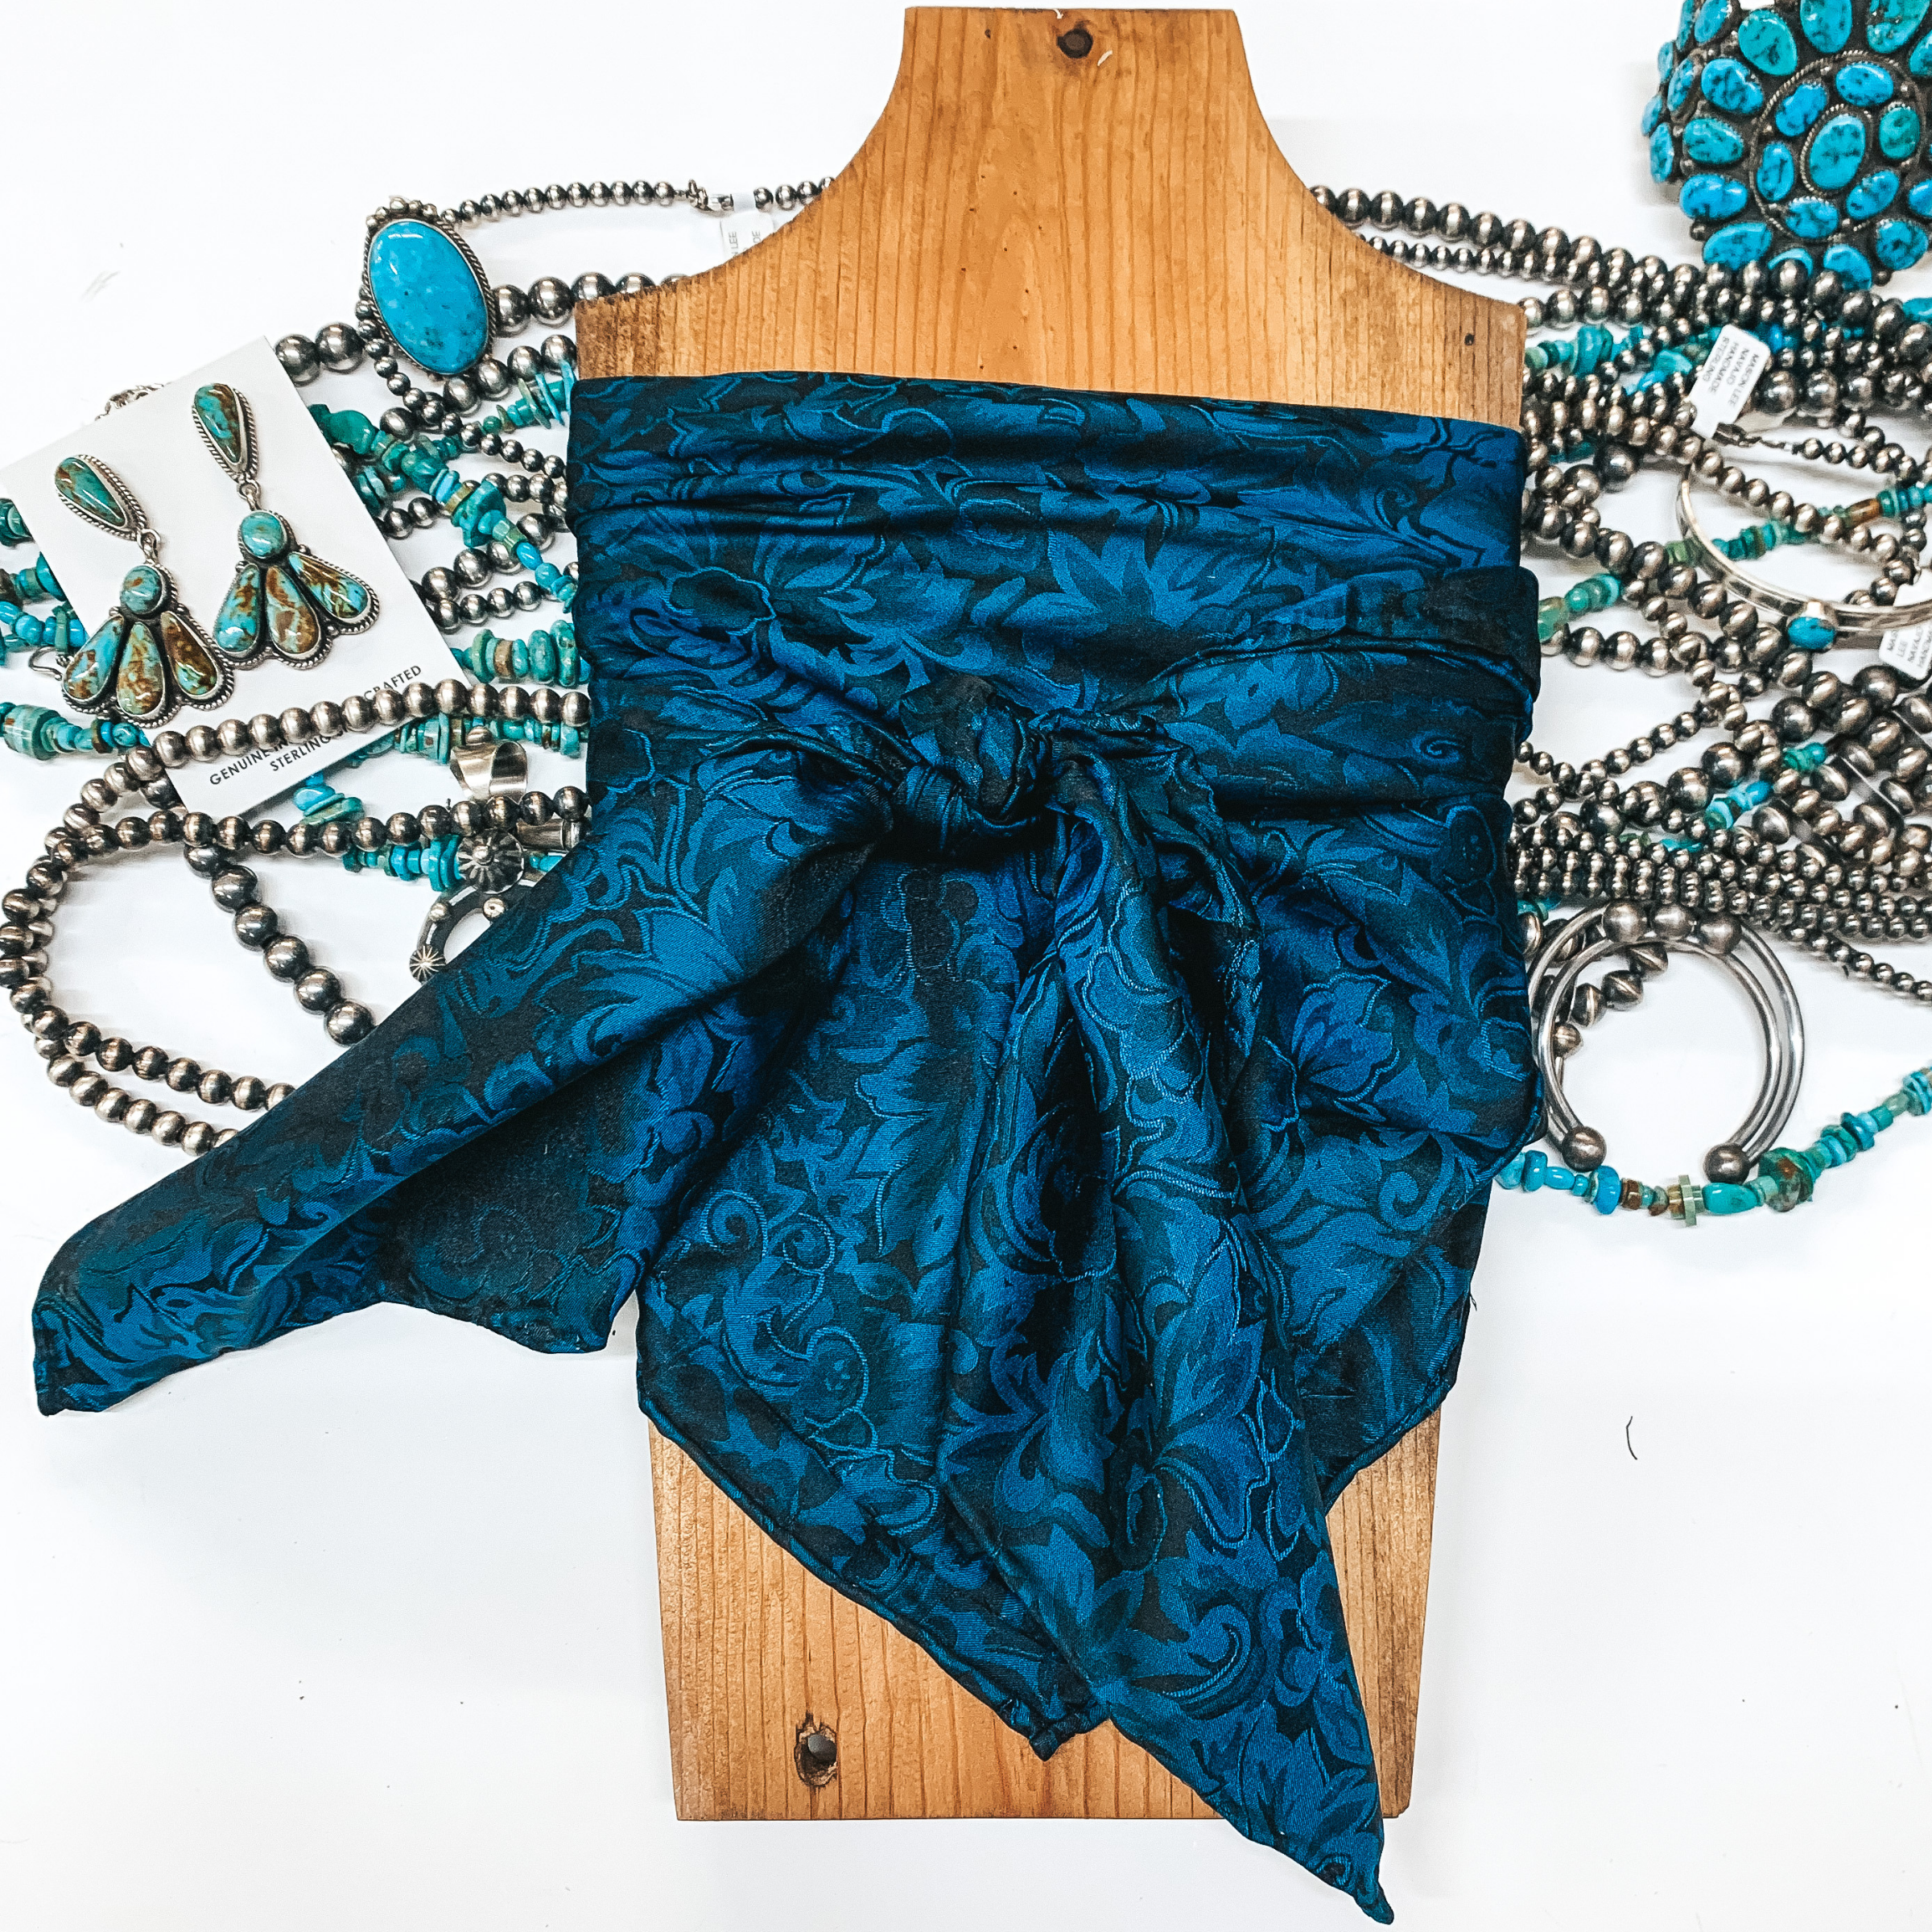 Baroque Wild Rag in Cobalt Blue - Giddy Up Glamour Boutique